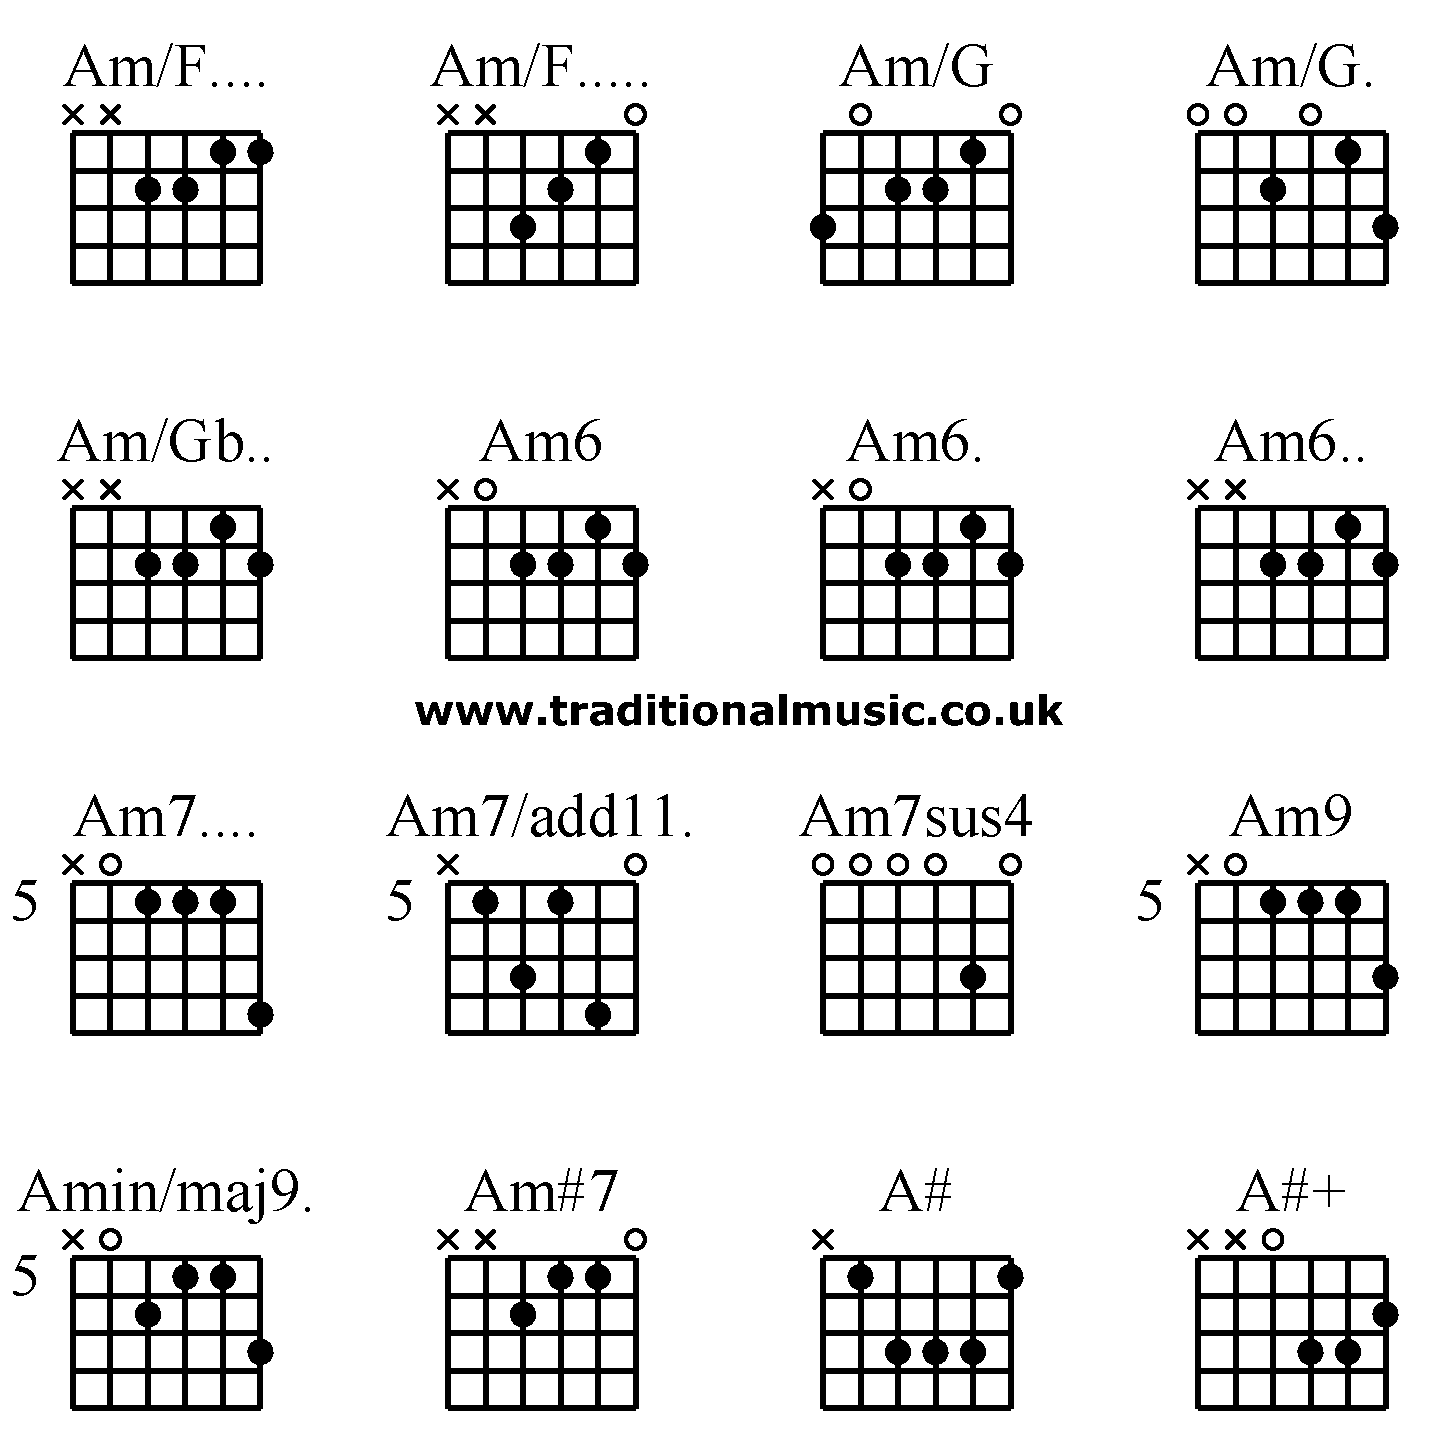 Advanced guitar chords:Am/F.... Am/F..... Am/G Am/G. Am/Gb.. Am6 Am6. Am6.. Am7.... Am7/add11. Am7sus4 ,Amin/maj9. Am#7 A# A#+ Am9